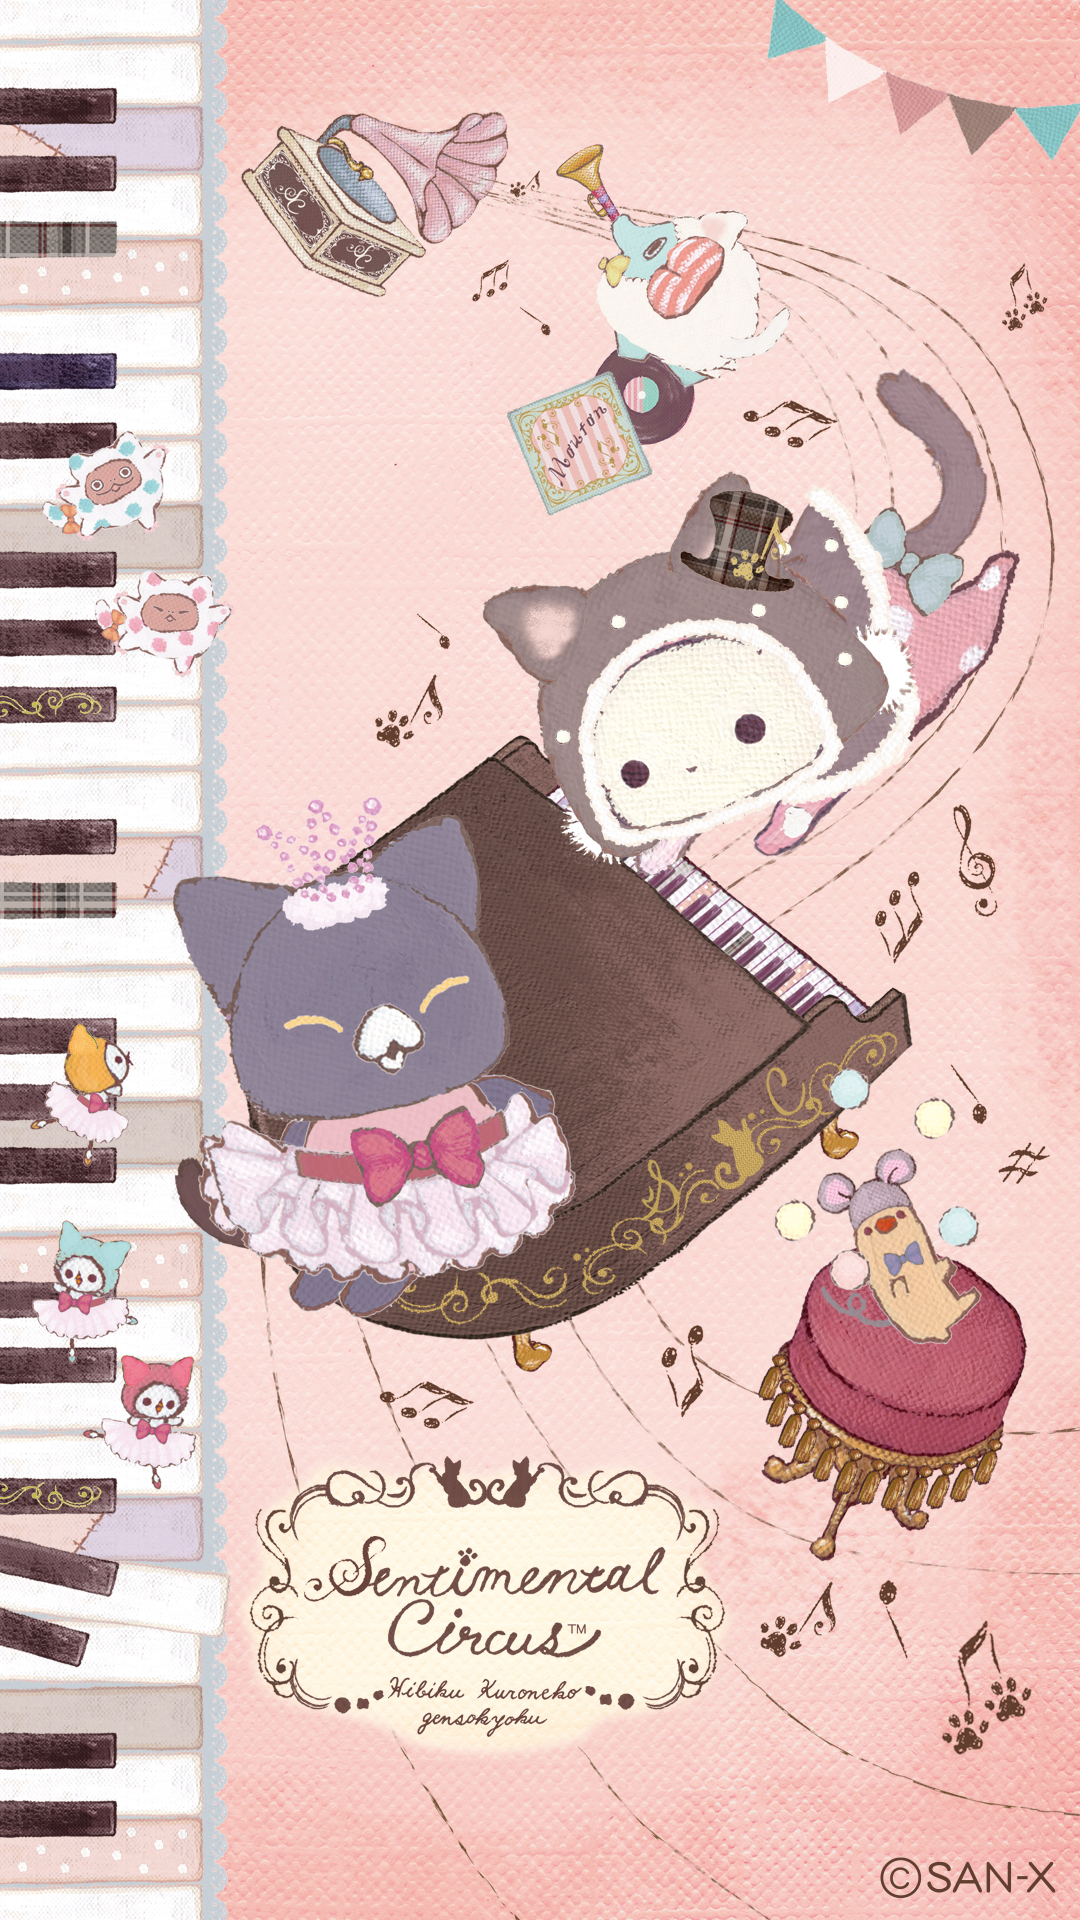 艾澀馬戲團 政府站在另一面 Senti Official Bihiroshi Cute Drawings Wallpaper Iphone Cute Kawaii Cute